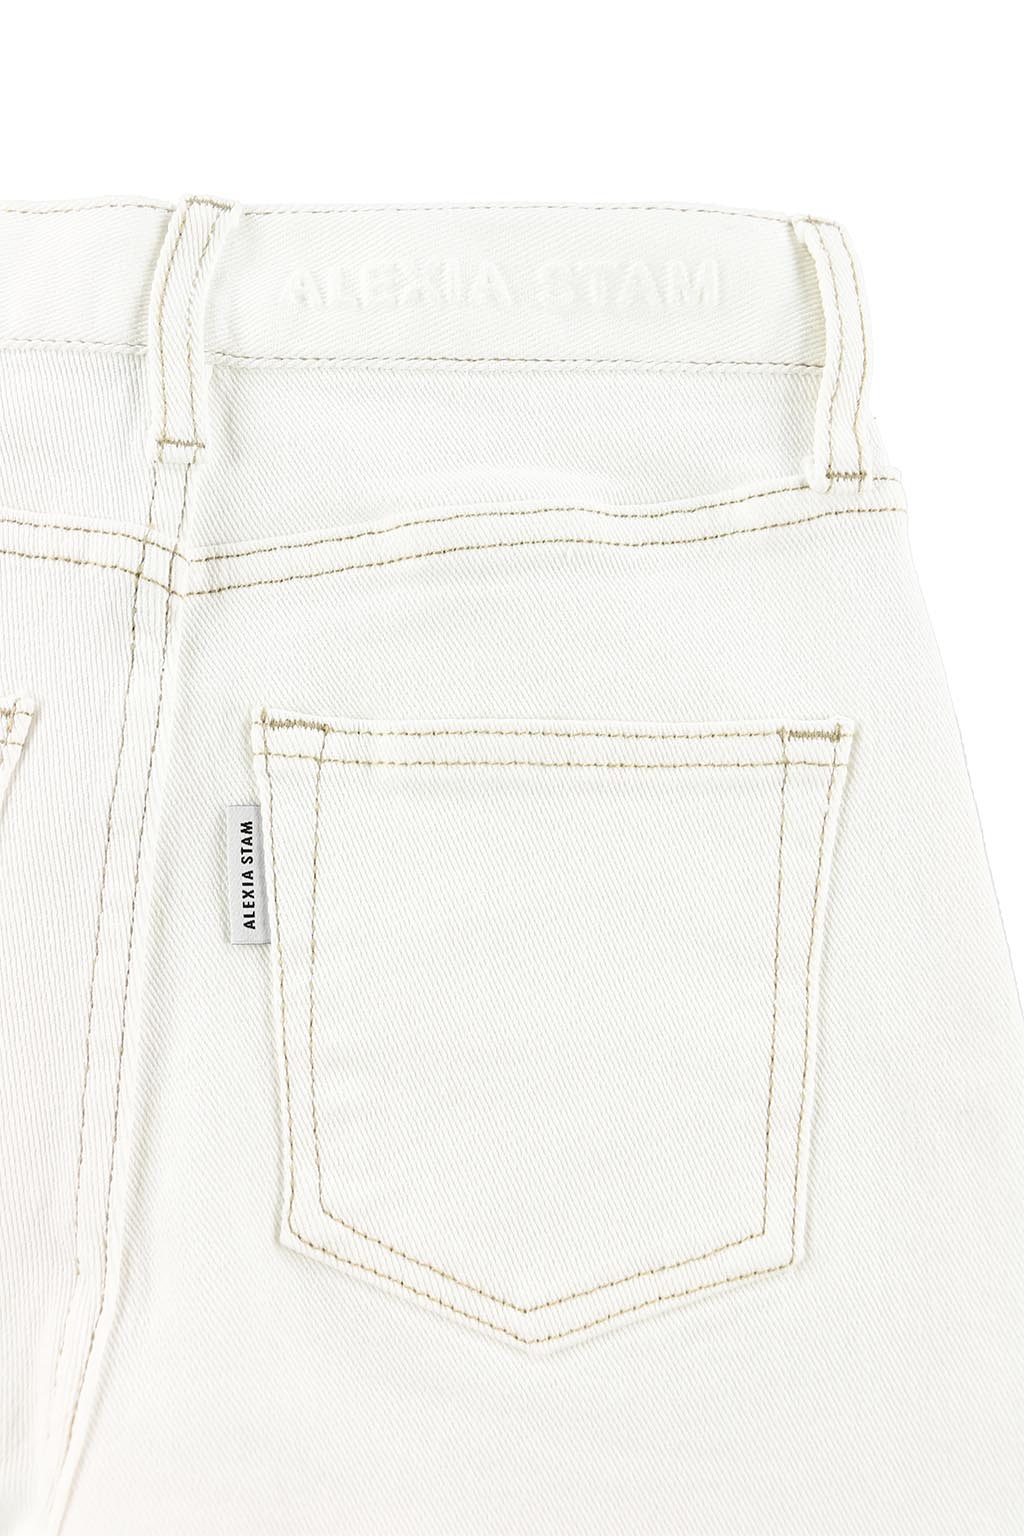 bootscut-pants-white-14